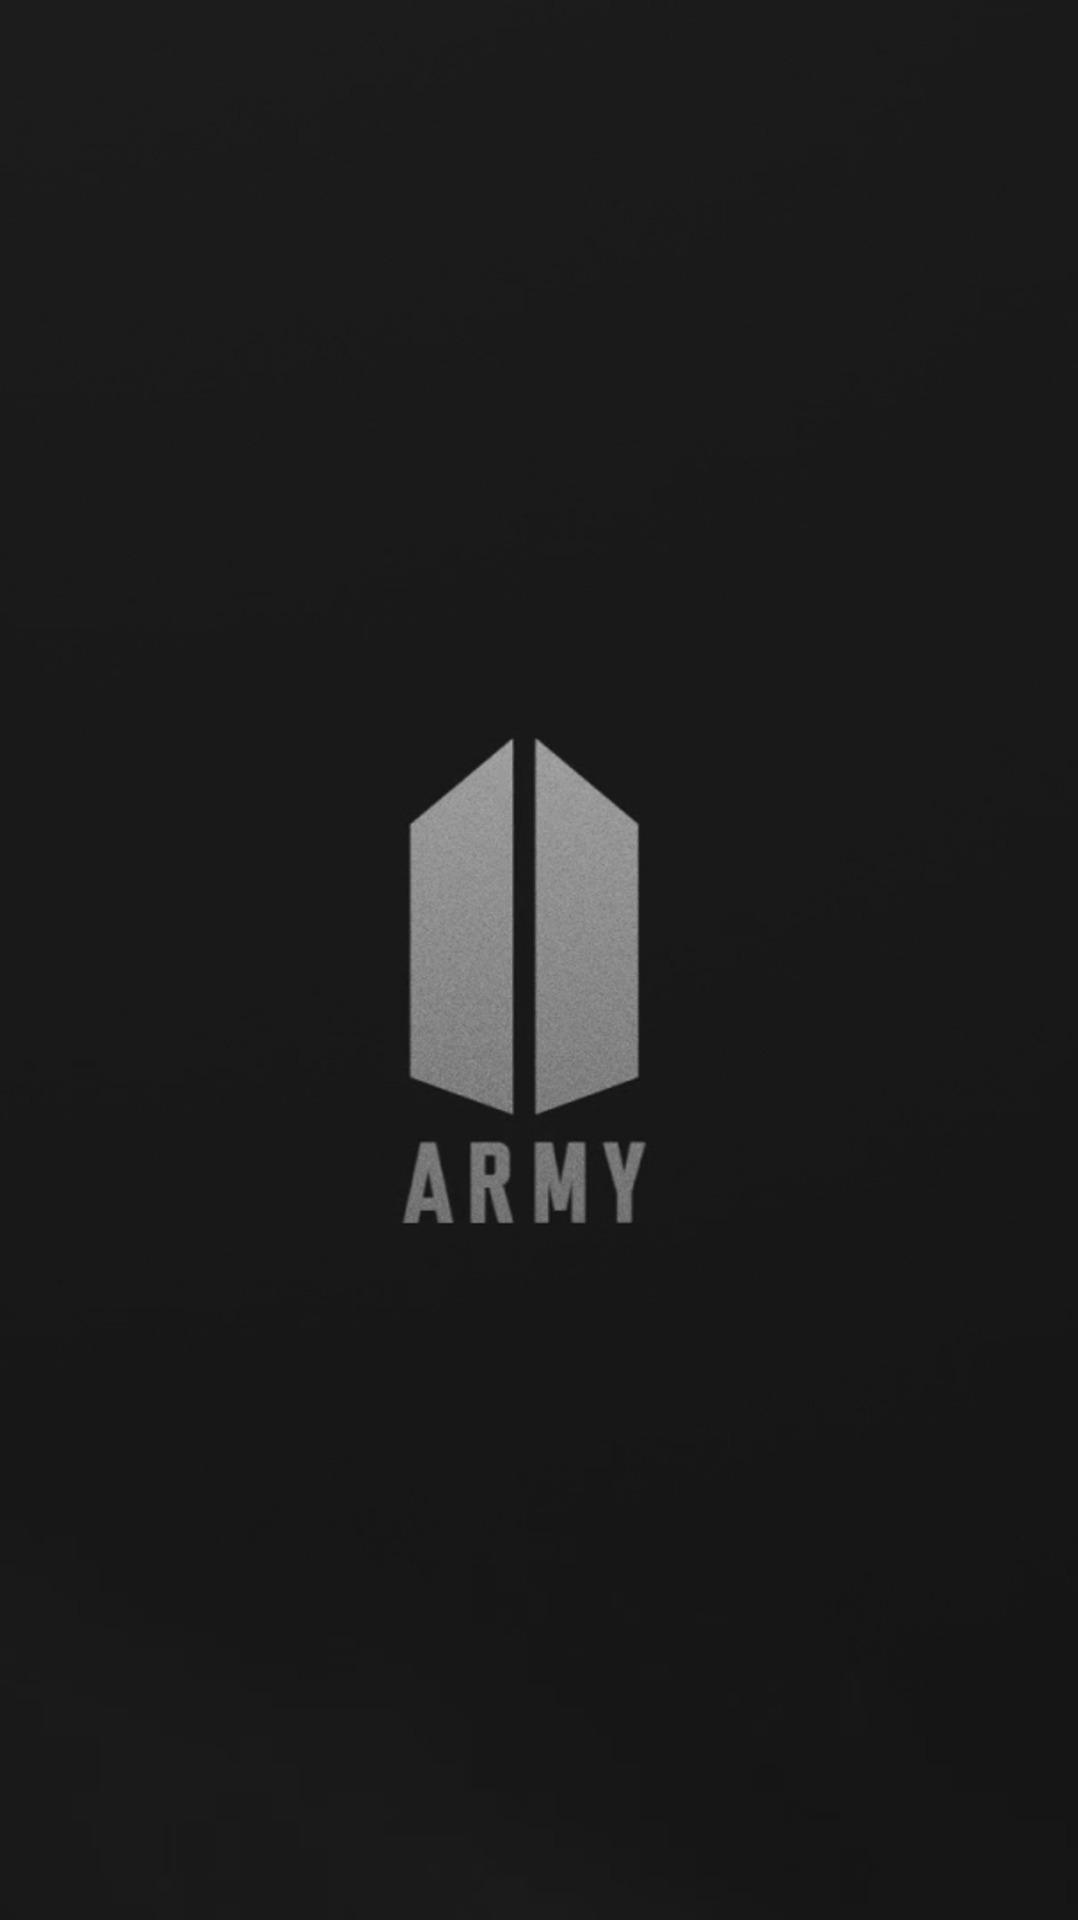 Bts army Logos